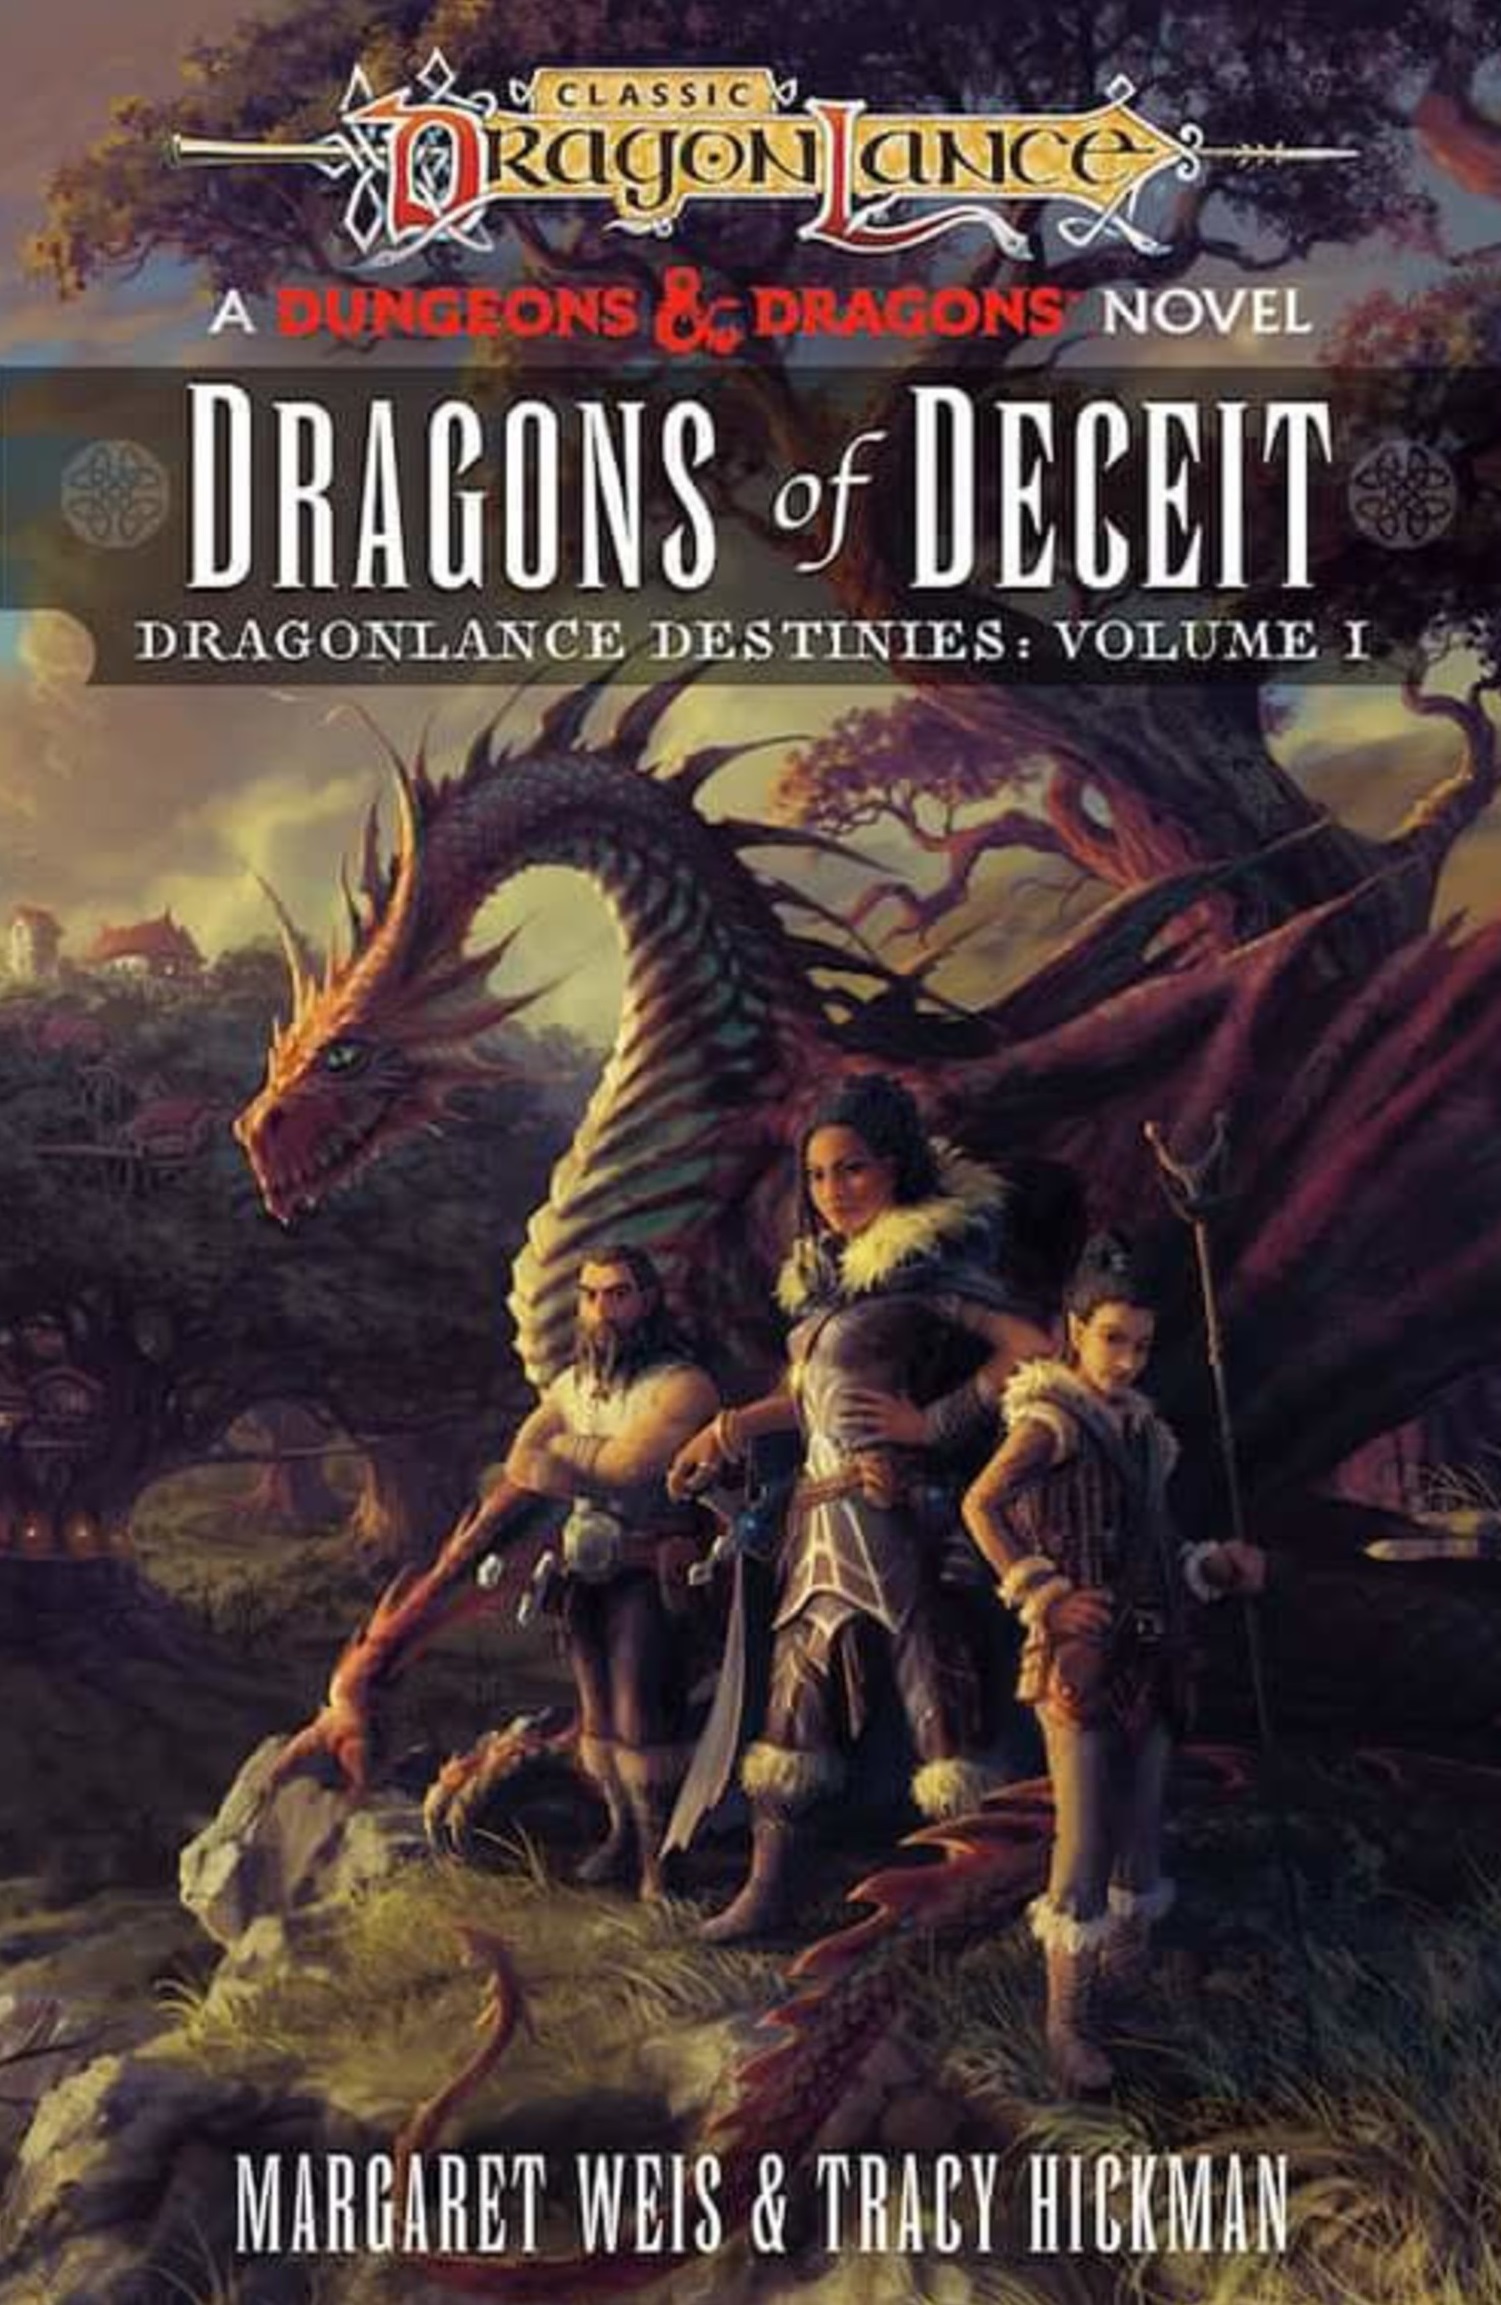 dragonlance-dragons-of-deceit.jpg